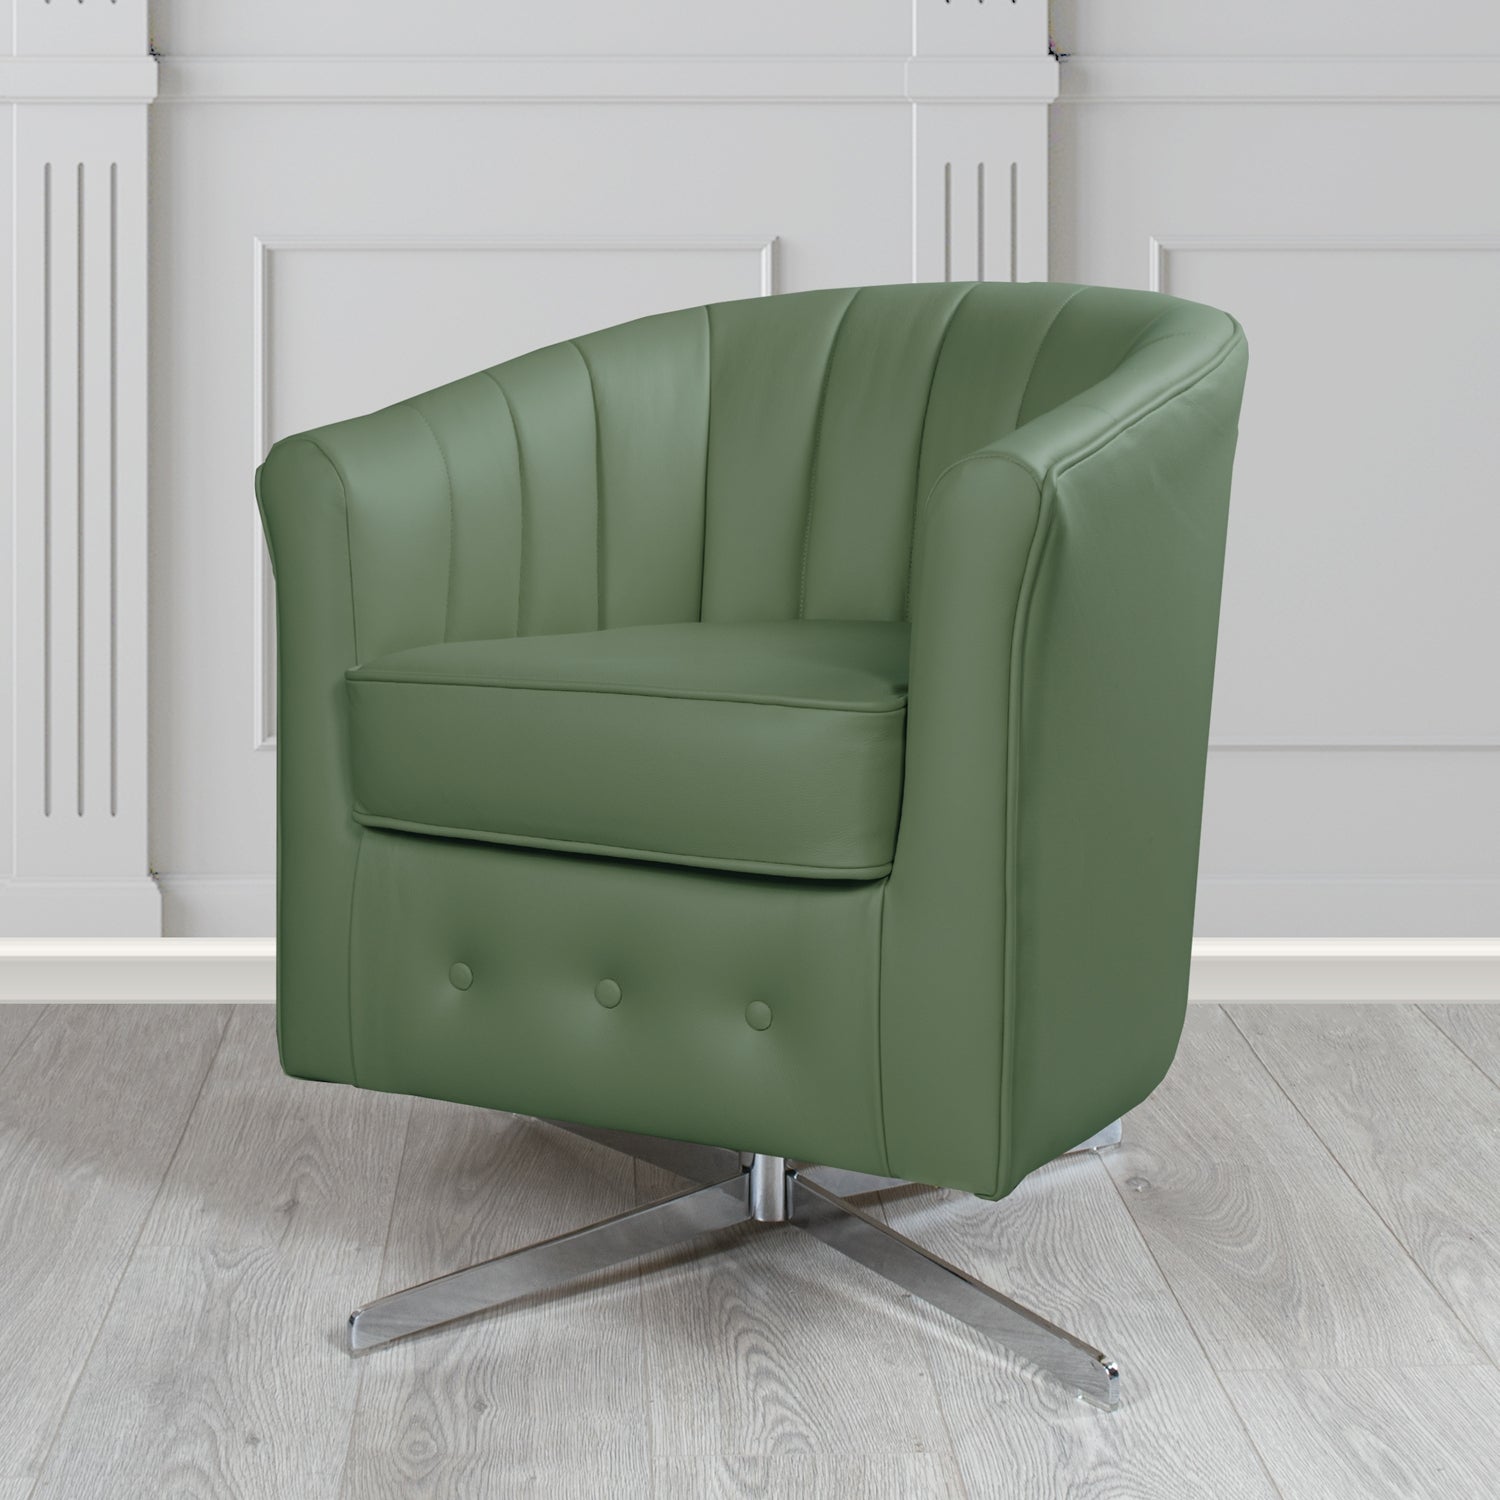 Doha Swivel Tub Chair in Vele Kale Genuine Leather